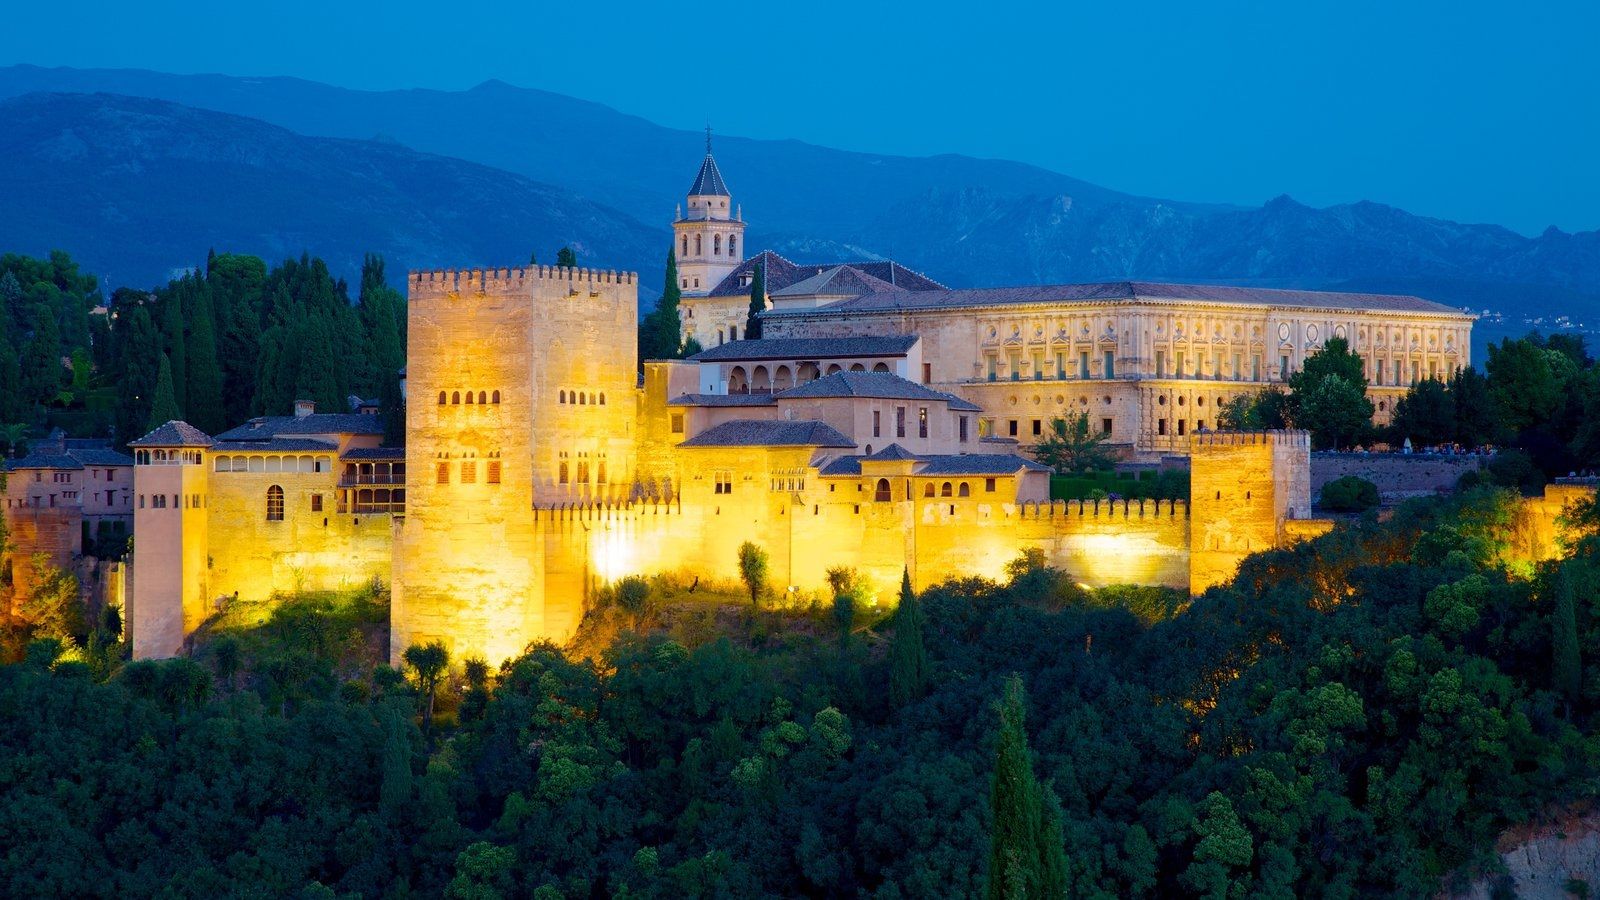 Vista nocturna de la Alhambra de Granada iluminada.